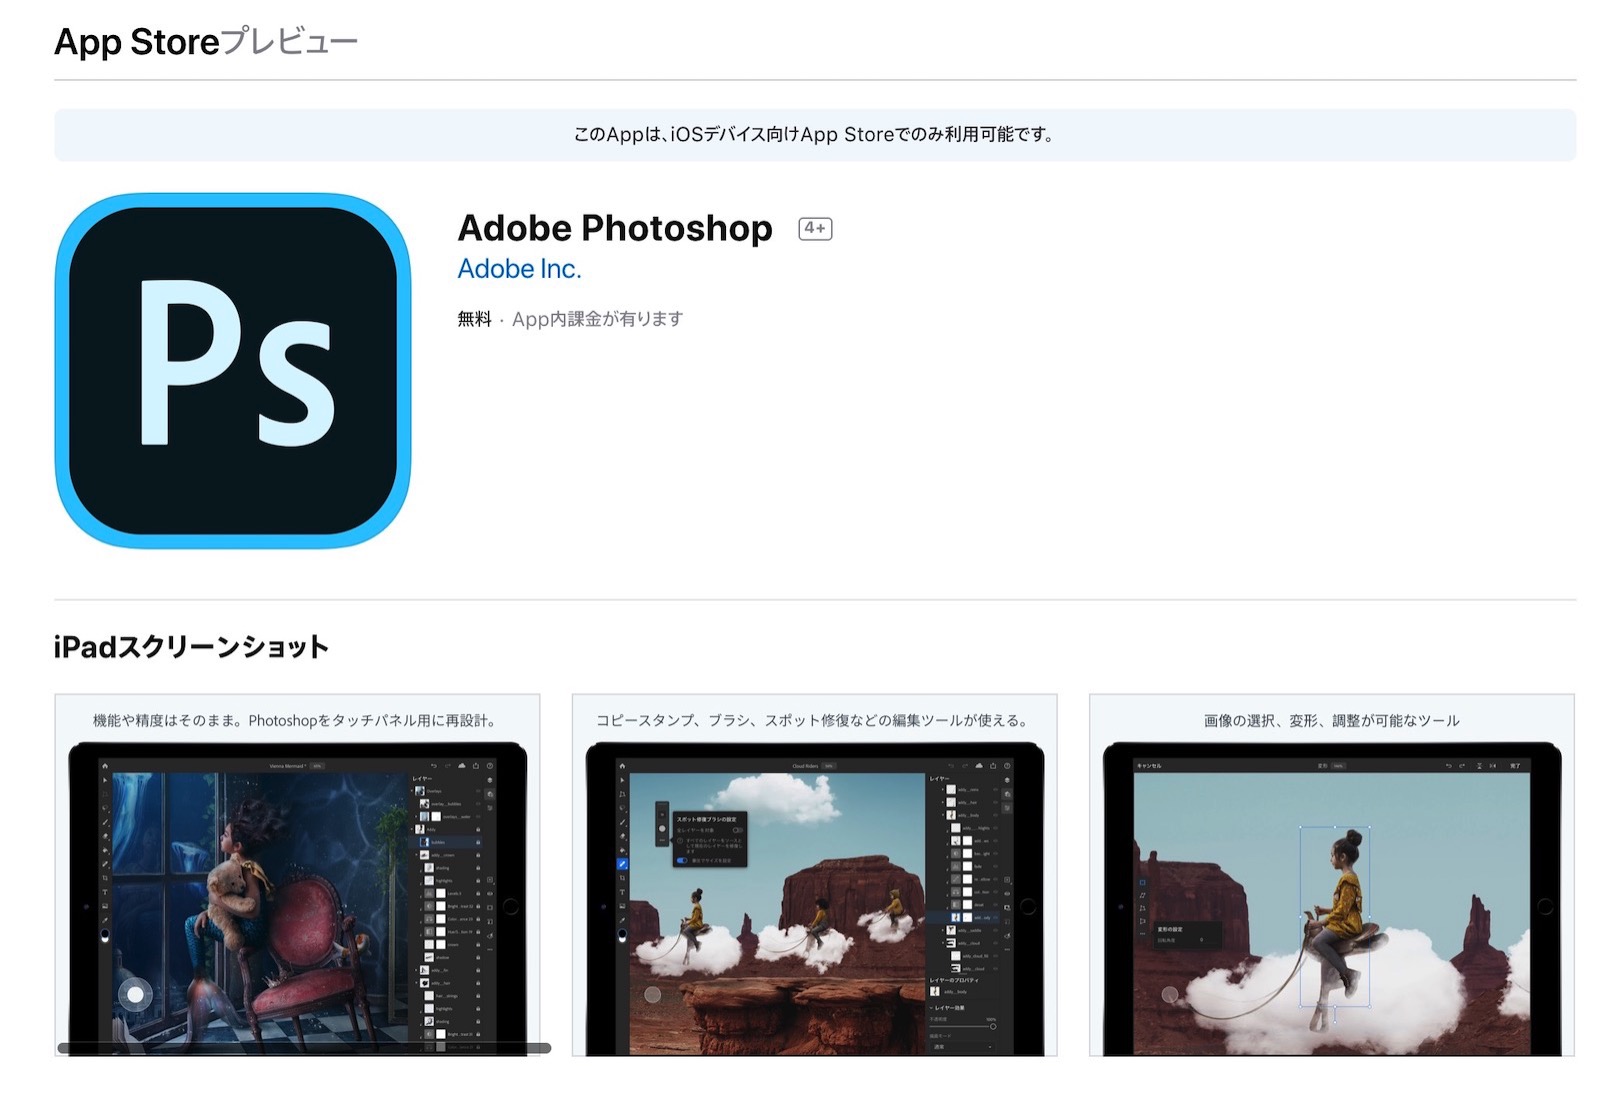 Adobe-Photoshop-for-iPad.jpg